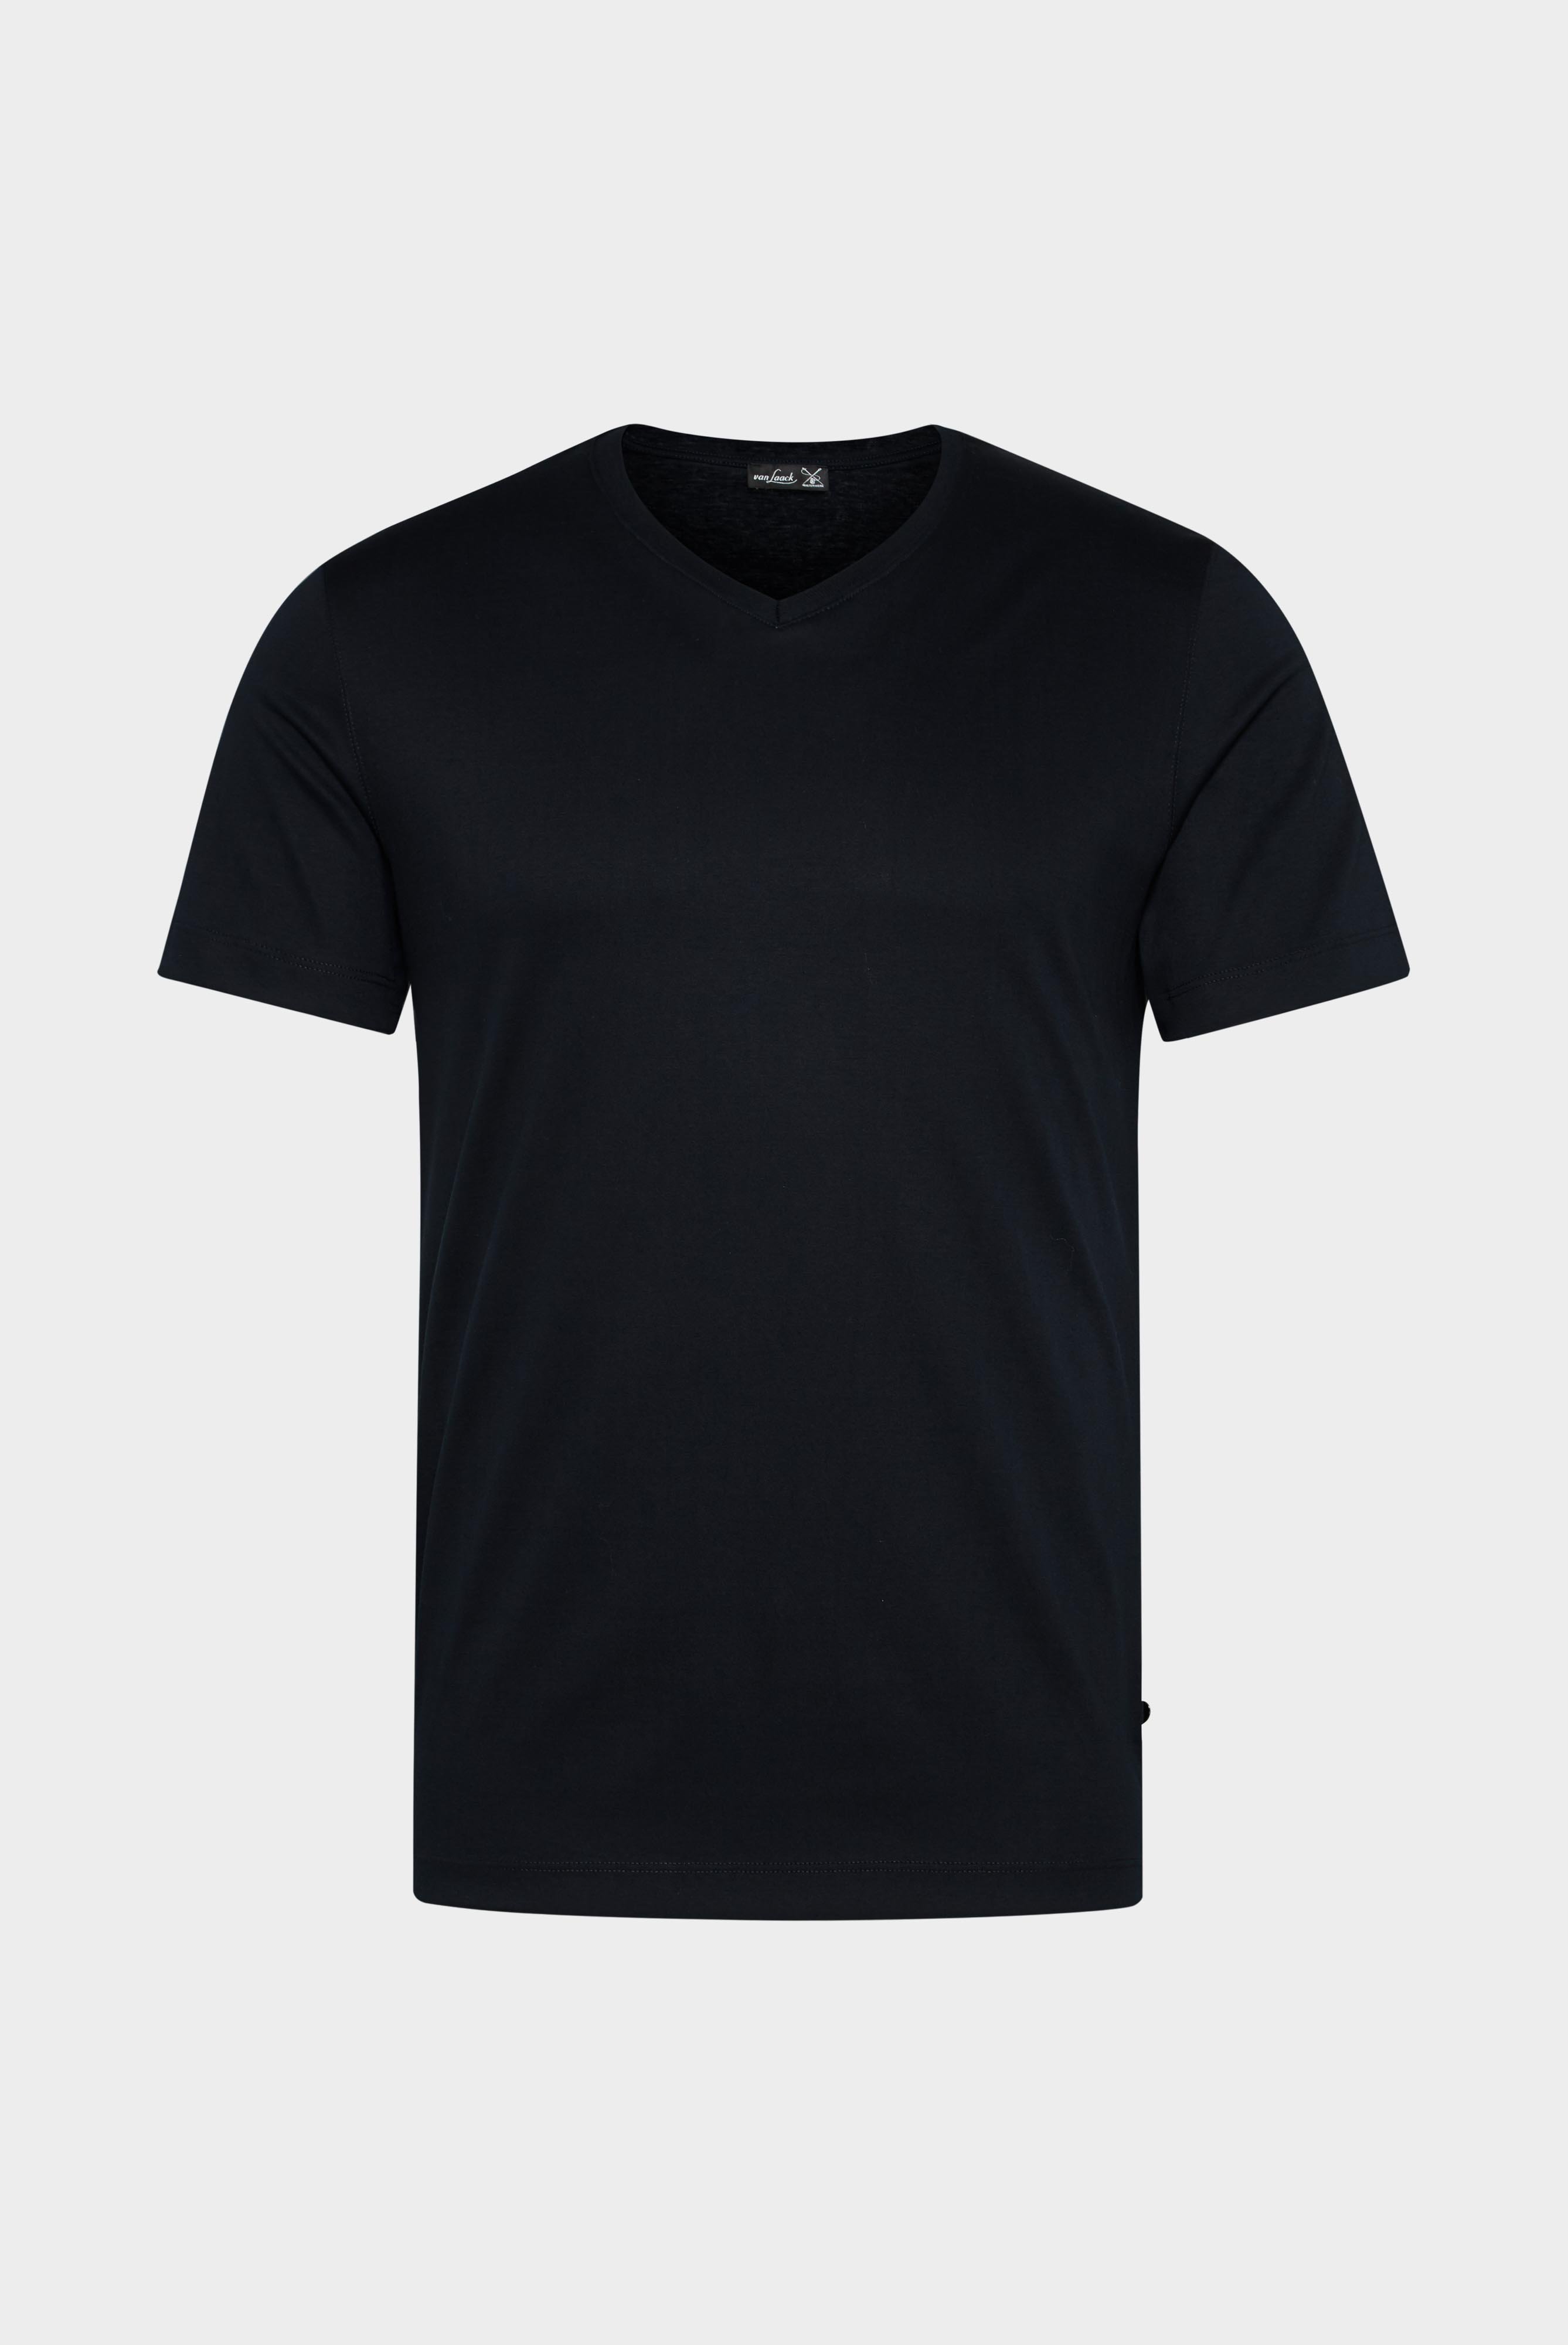 T-Shirts+Swiss Cotton Jersey V-Neck T-Shirt+20.1715.UX.180031.790.XXL